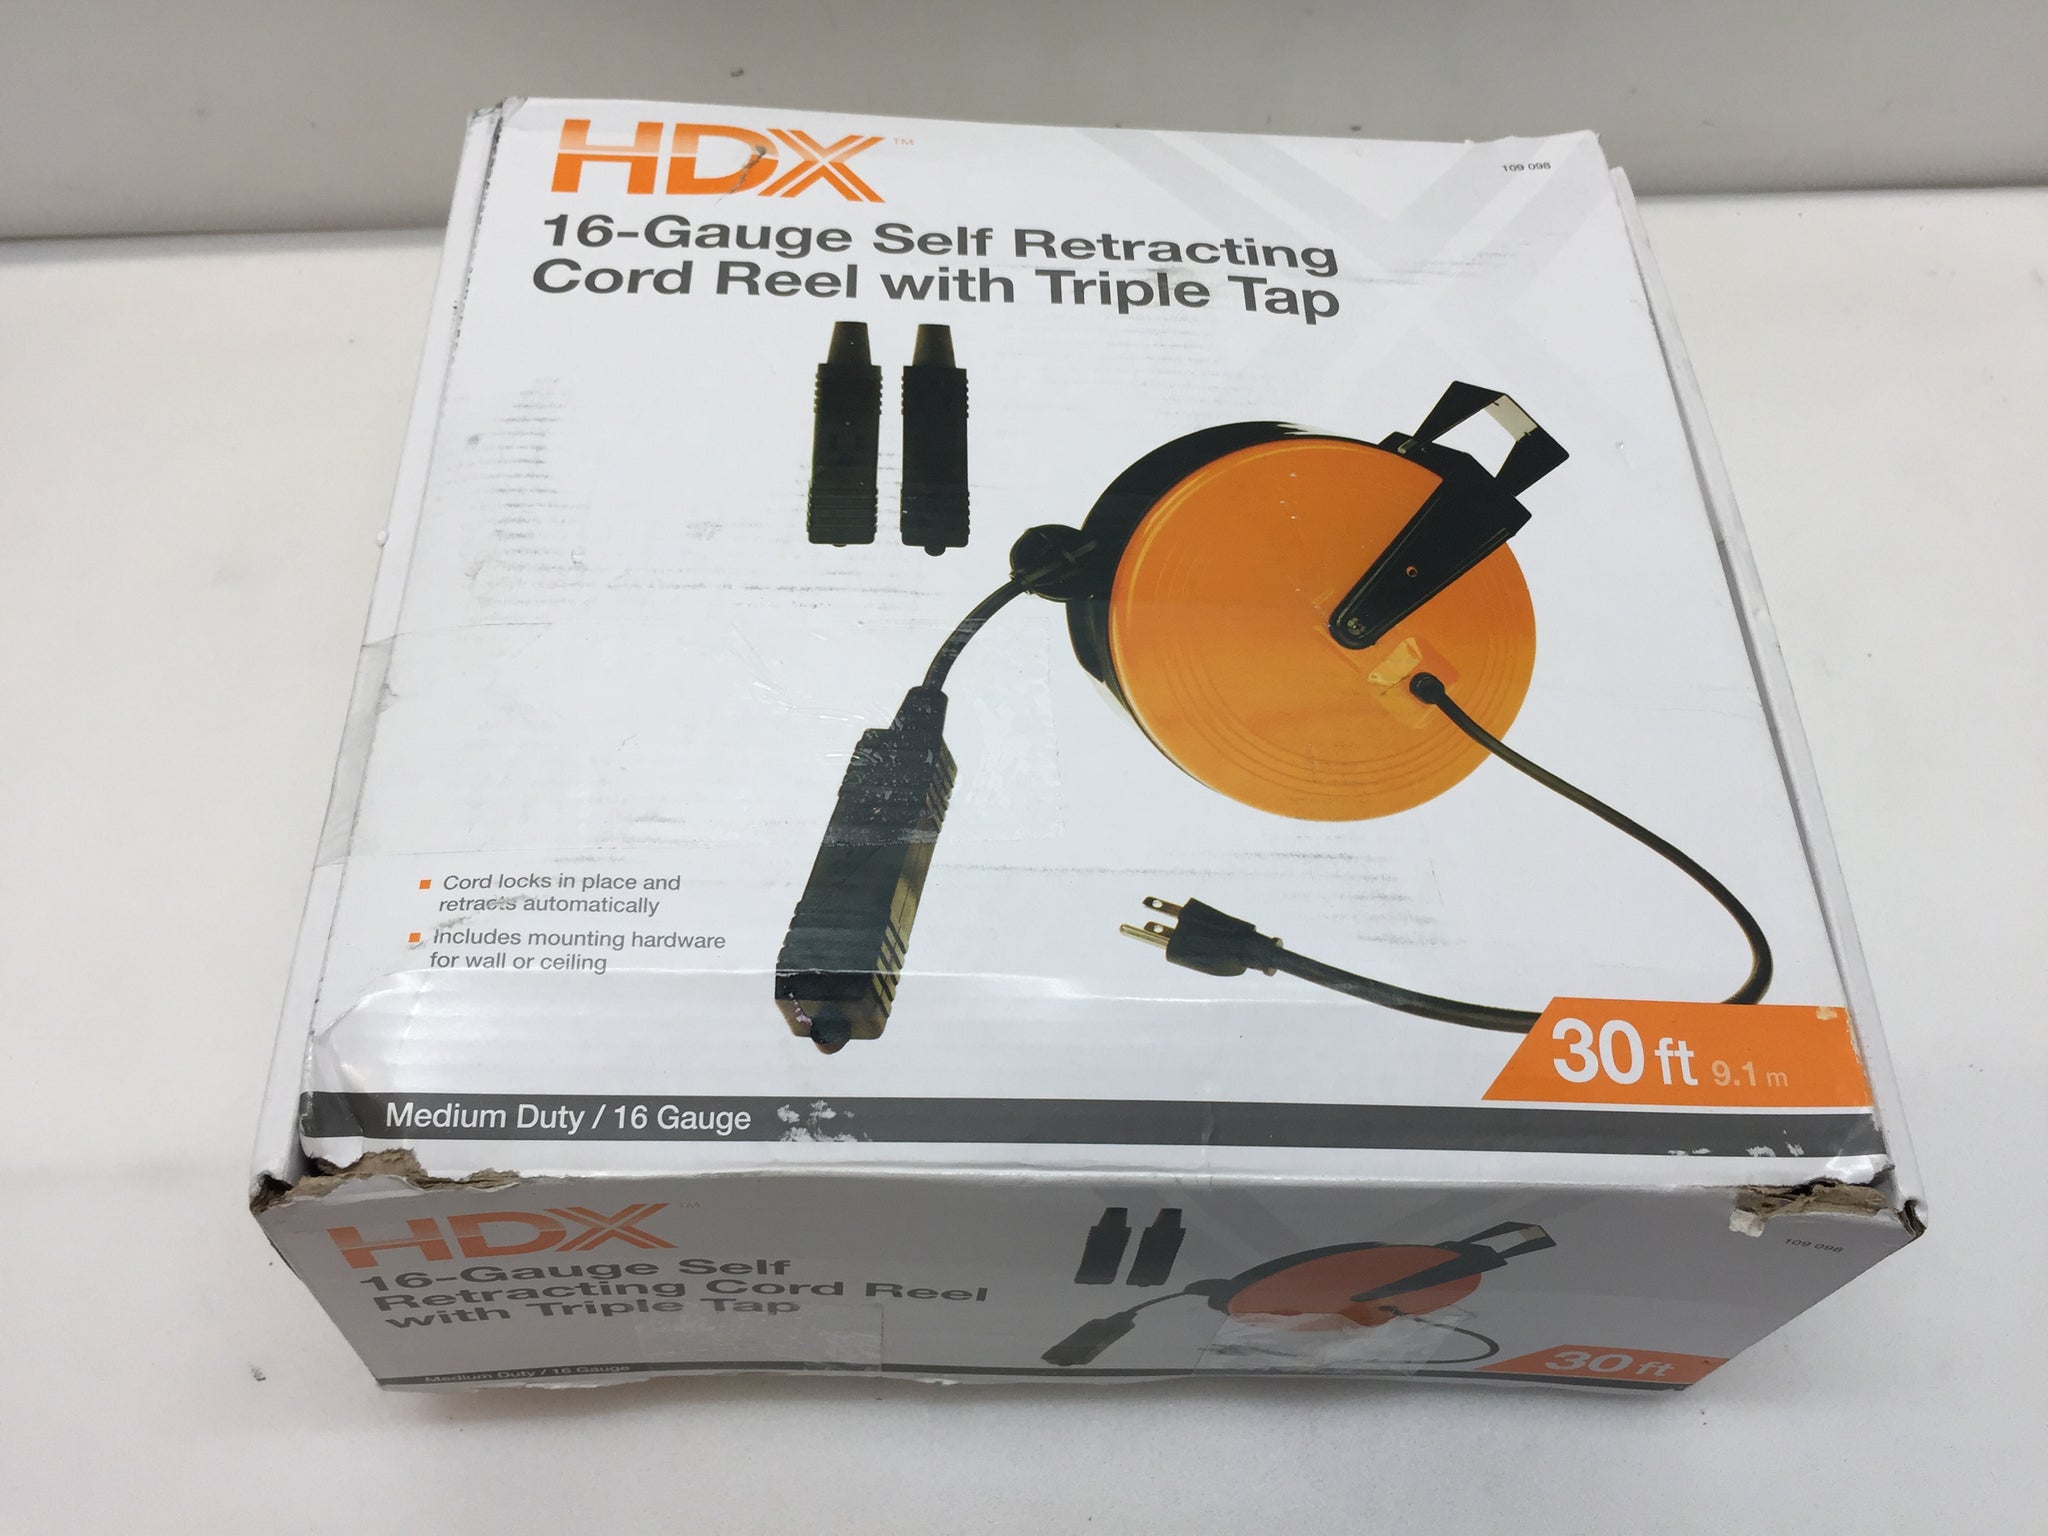 HDX HD-800 30 ft. 16/3 Heavy-Duty Retractable Extension Cord Reel